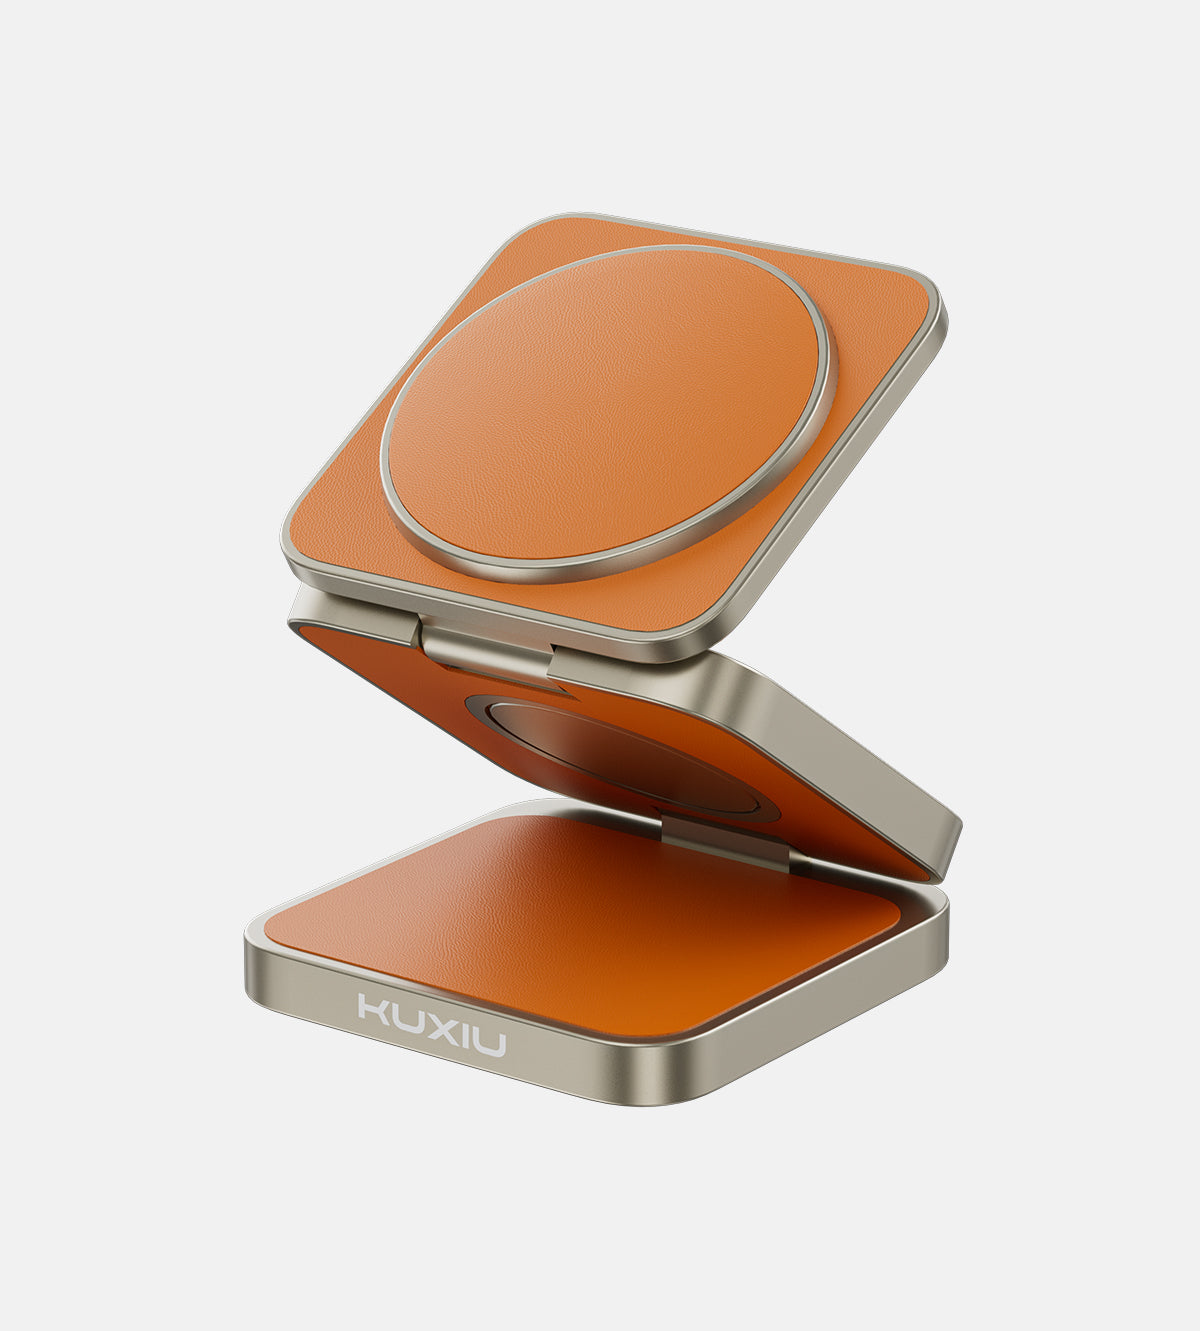 KUXIU X40 Pro 3-In-1 折りたたみ式磁気ワイヤレス充電器 & スタンド キット - オレンジ レザー